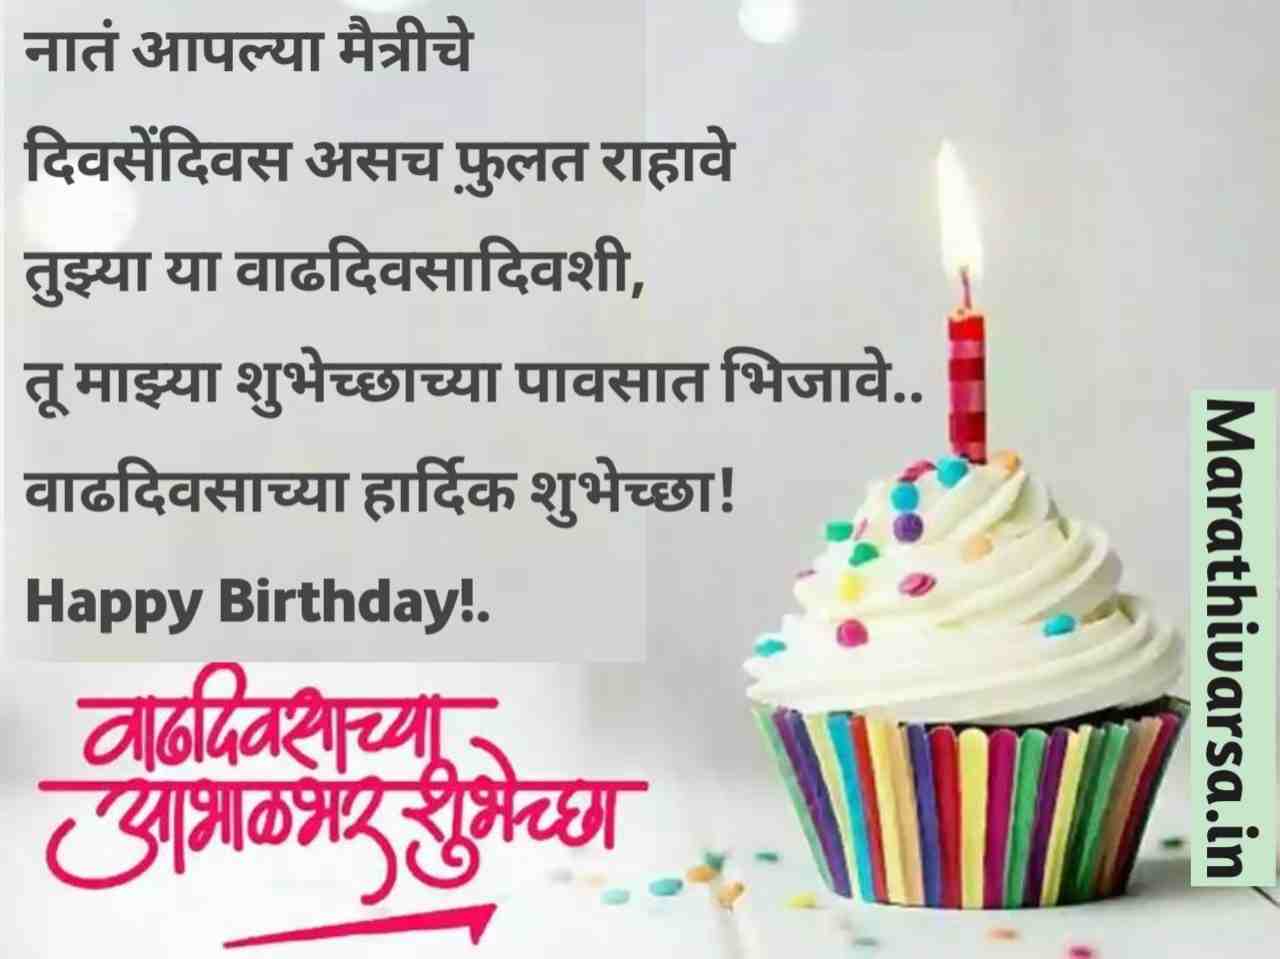 Happy Birthday Wishes For Friend In Marathi